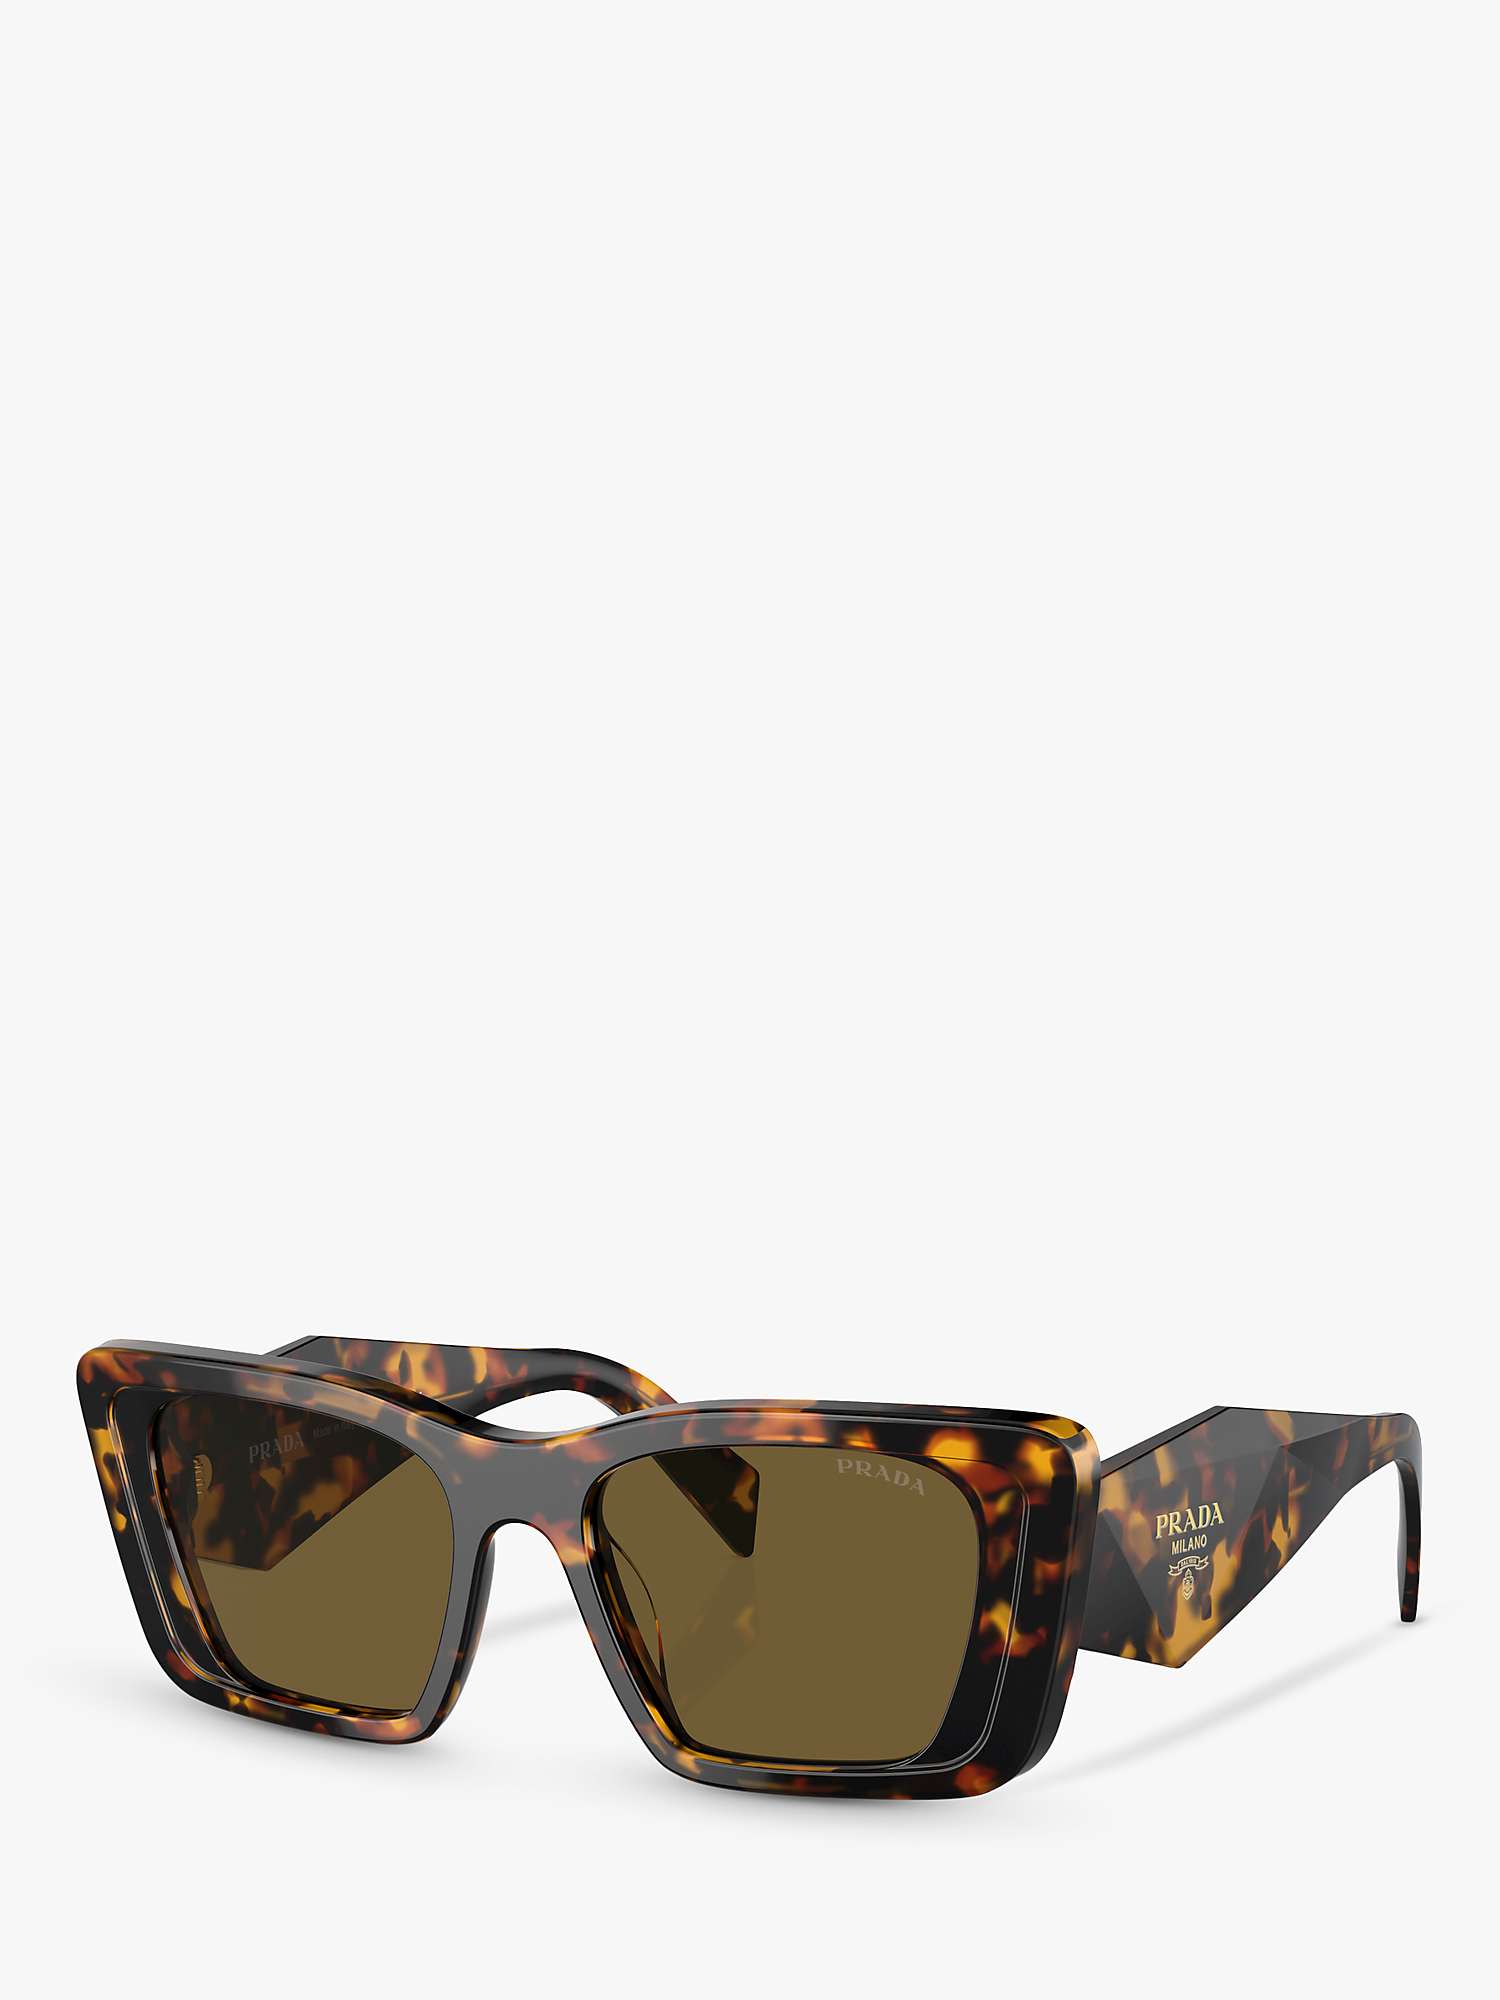 Buy Prada PR 08YS Women's Butterfly Sunglasses, Honey Tortoise/Brown Online at johnlewis.com